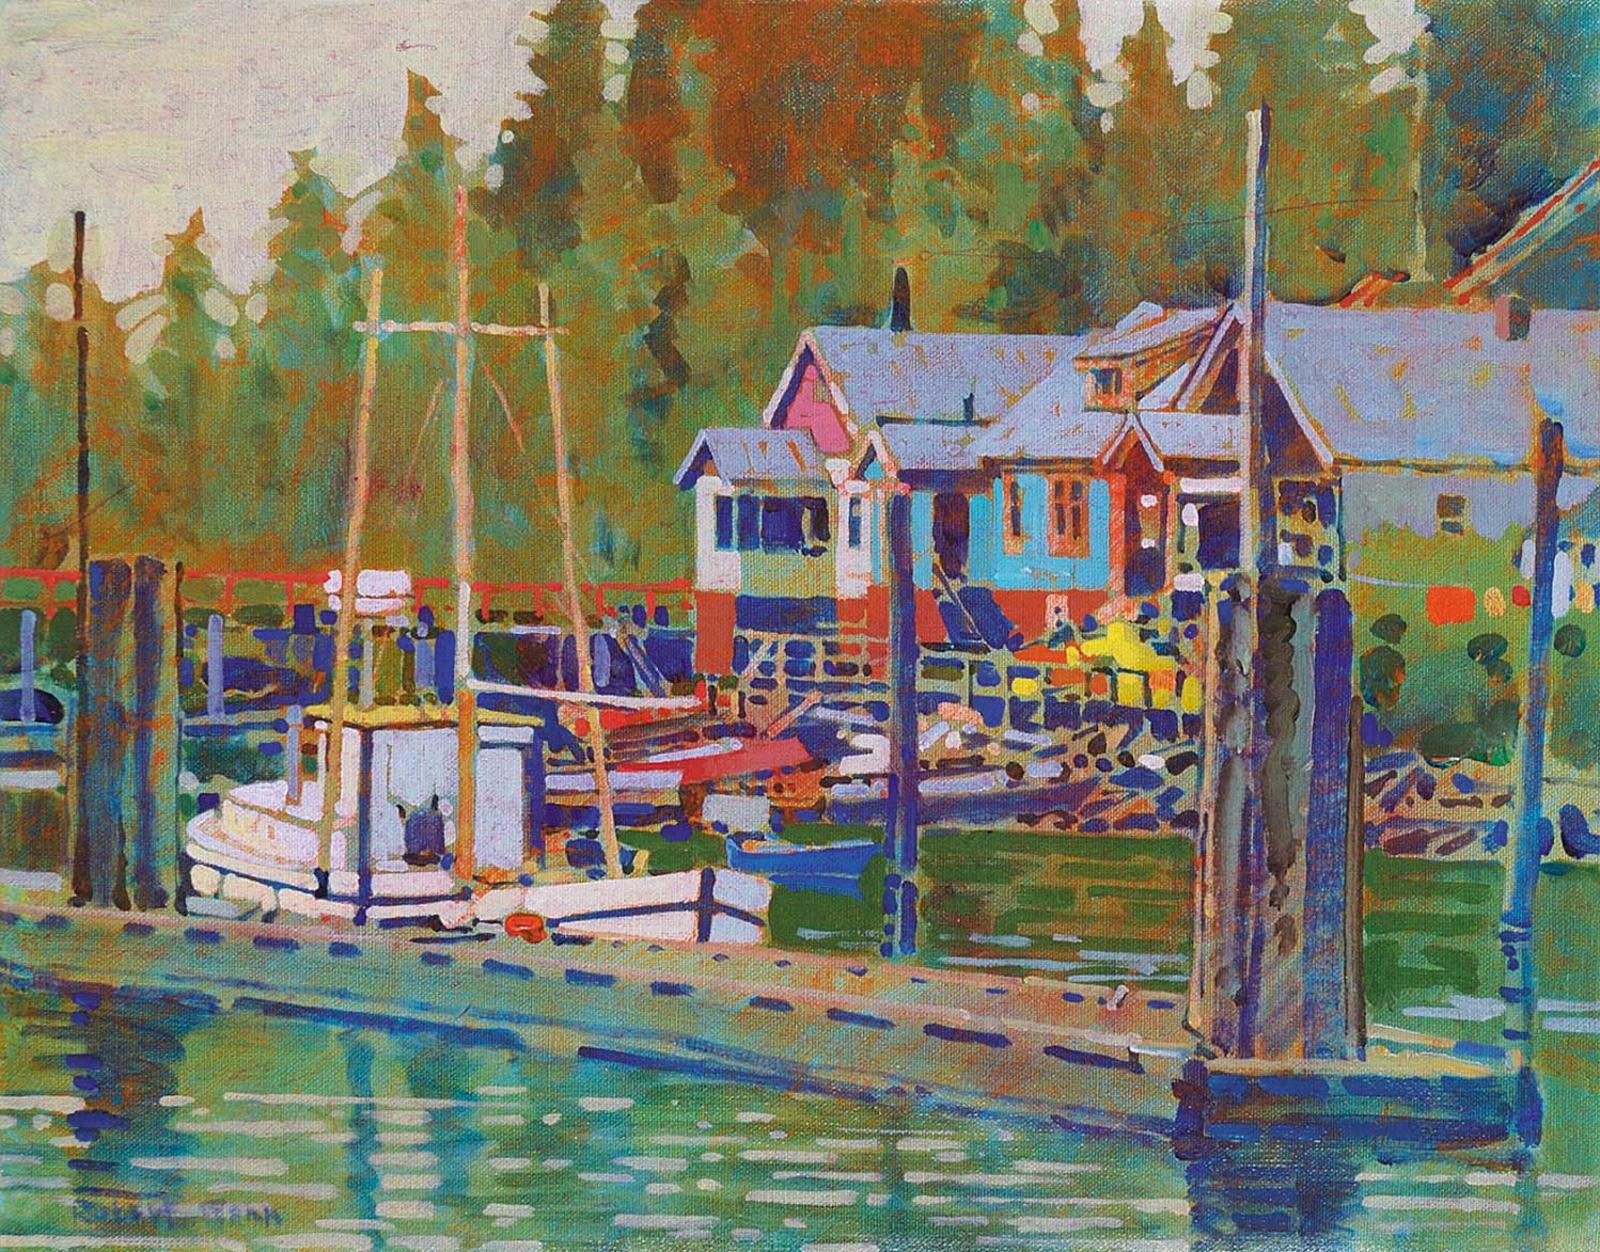 Robert Douglas Genn (1936-2014) - Untitled - Boats in Harbour